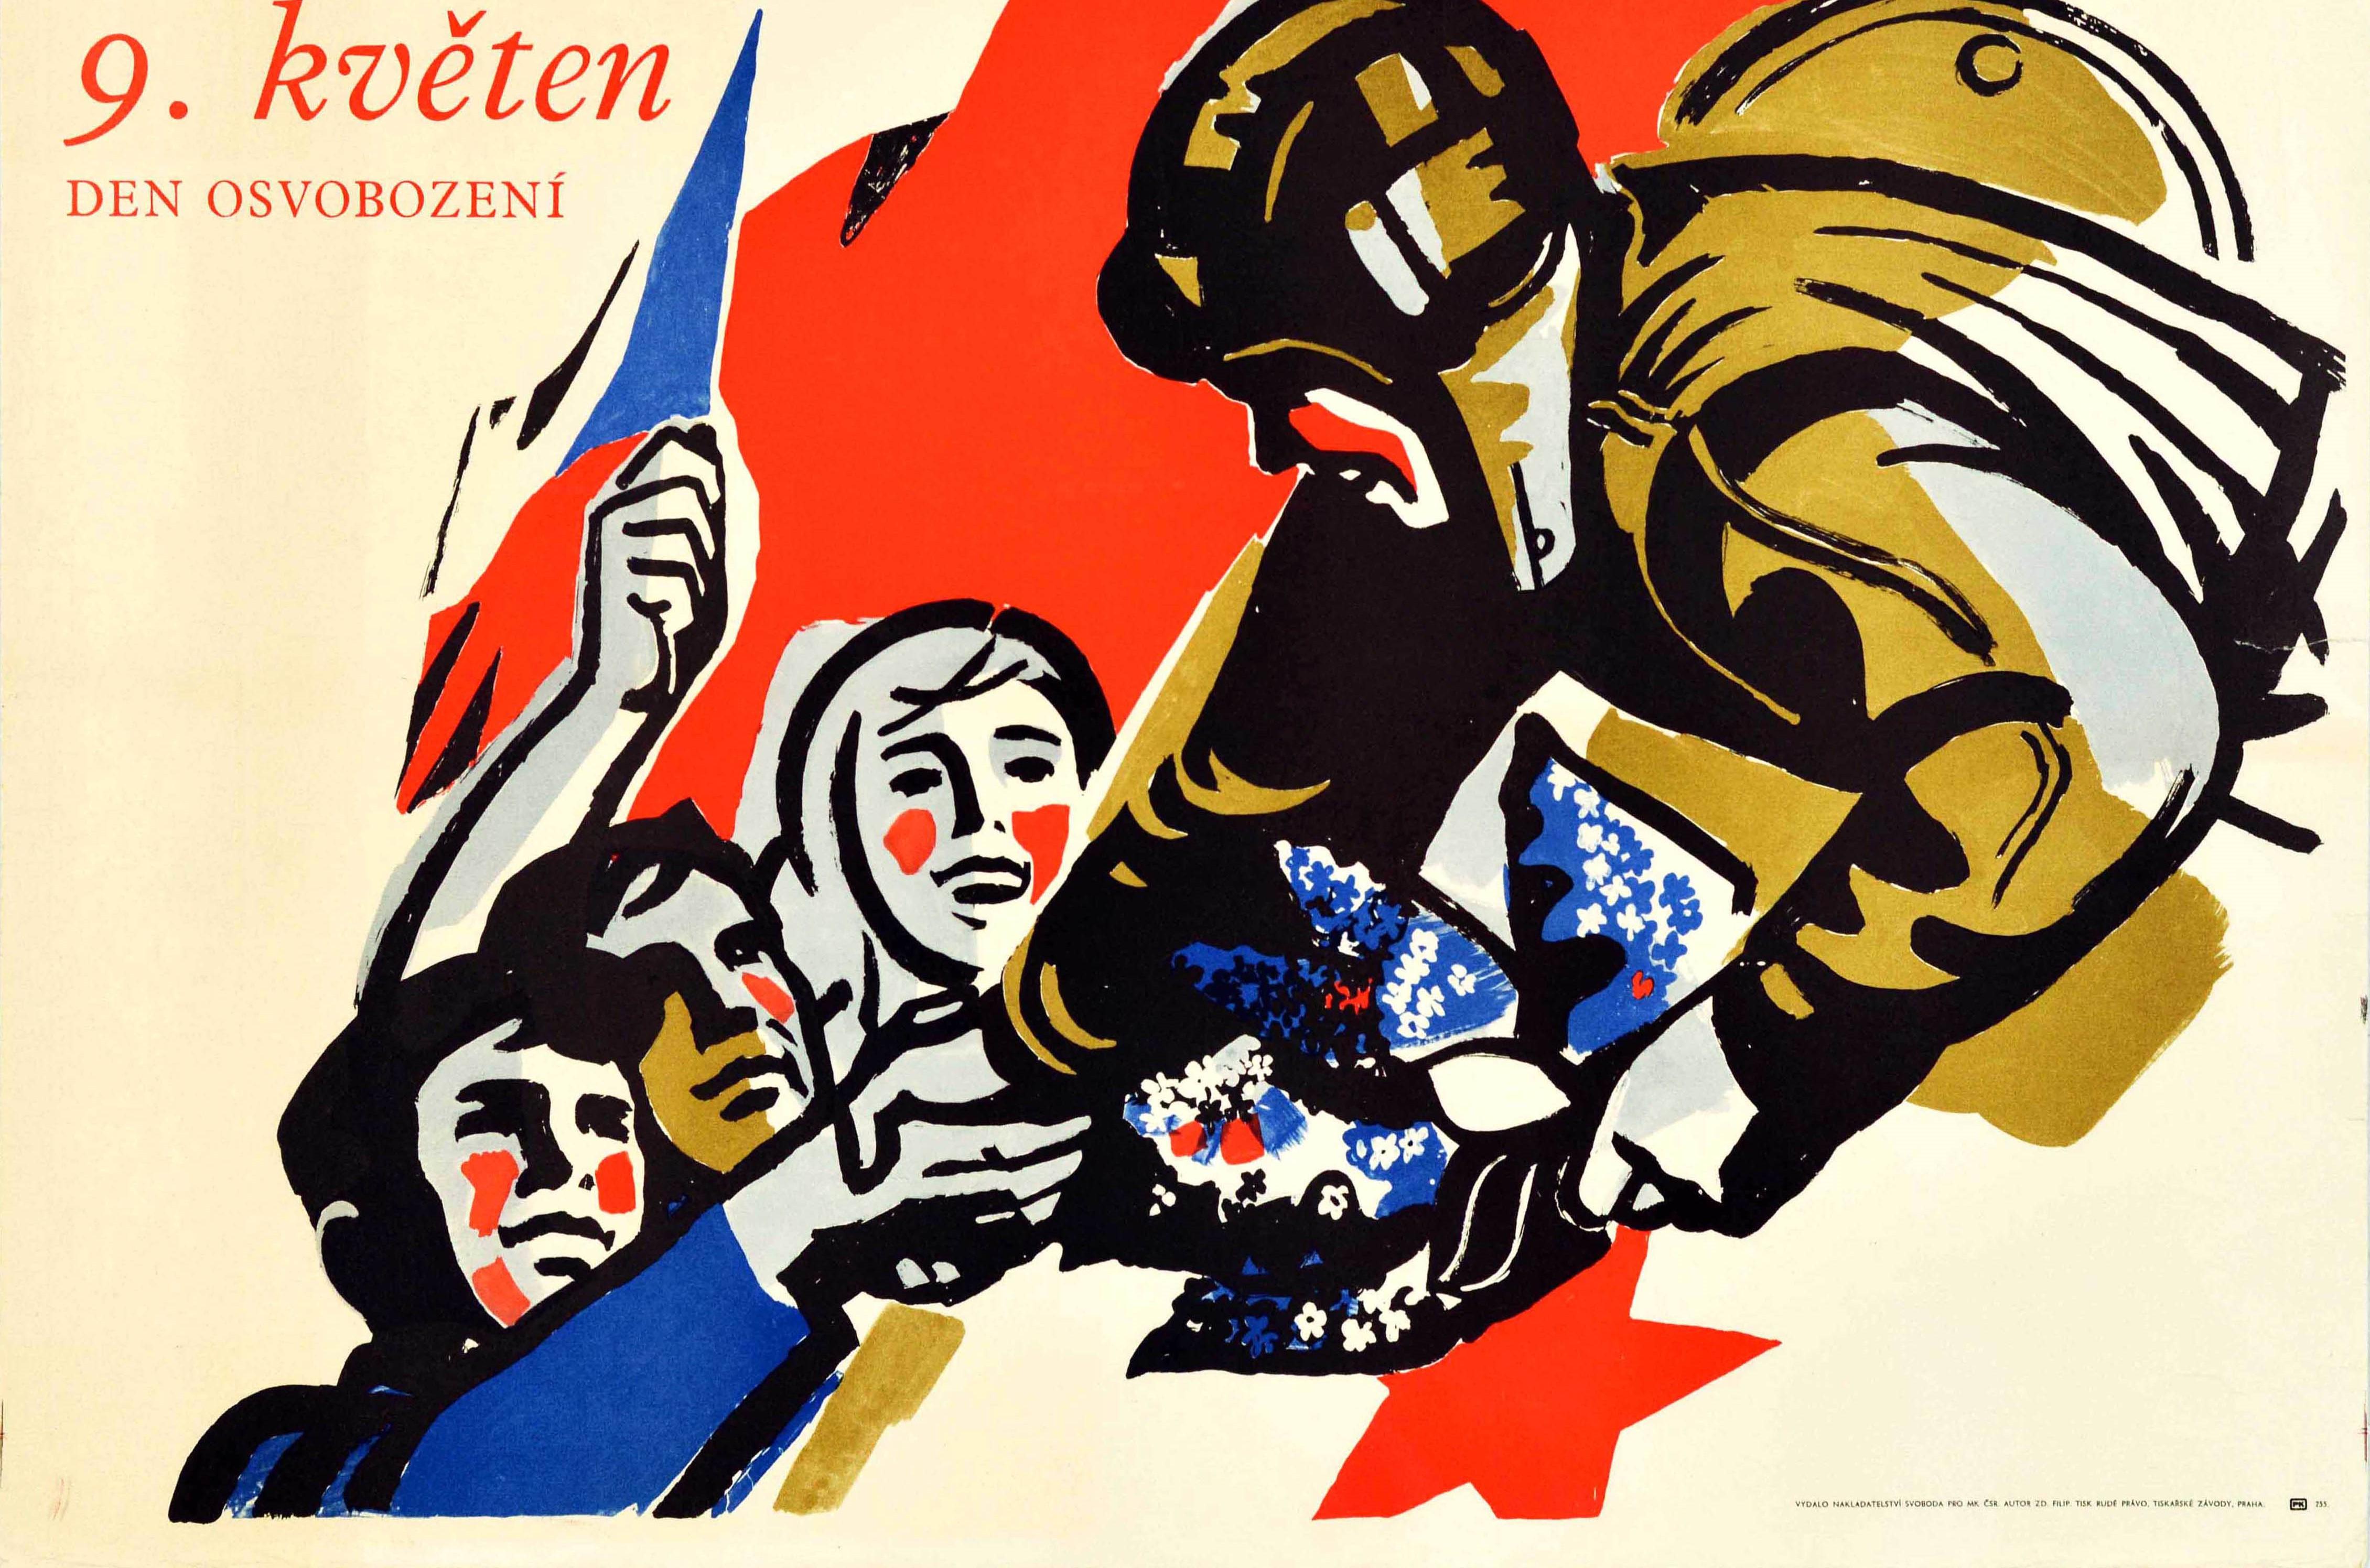 Original Vintage Poster May 9 Den Osvobozeni Freedom Day End WWII Czechoslovakia - White Print by Unknown